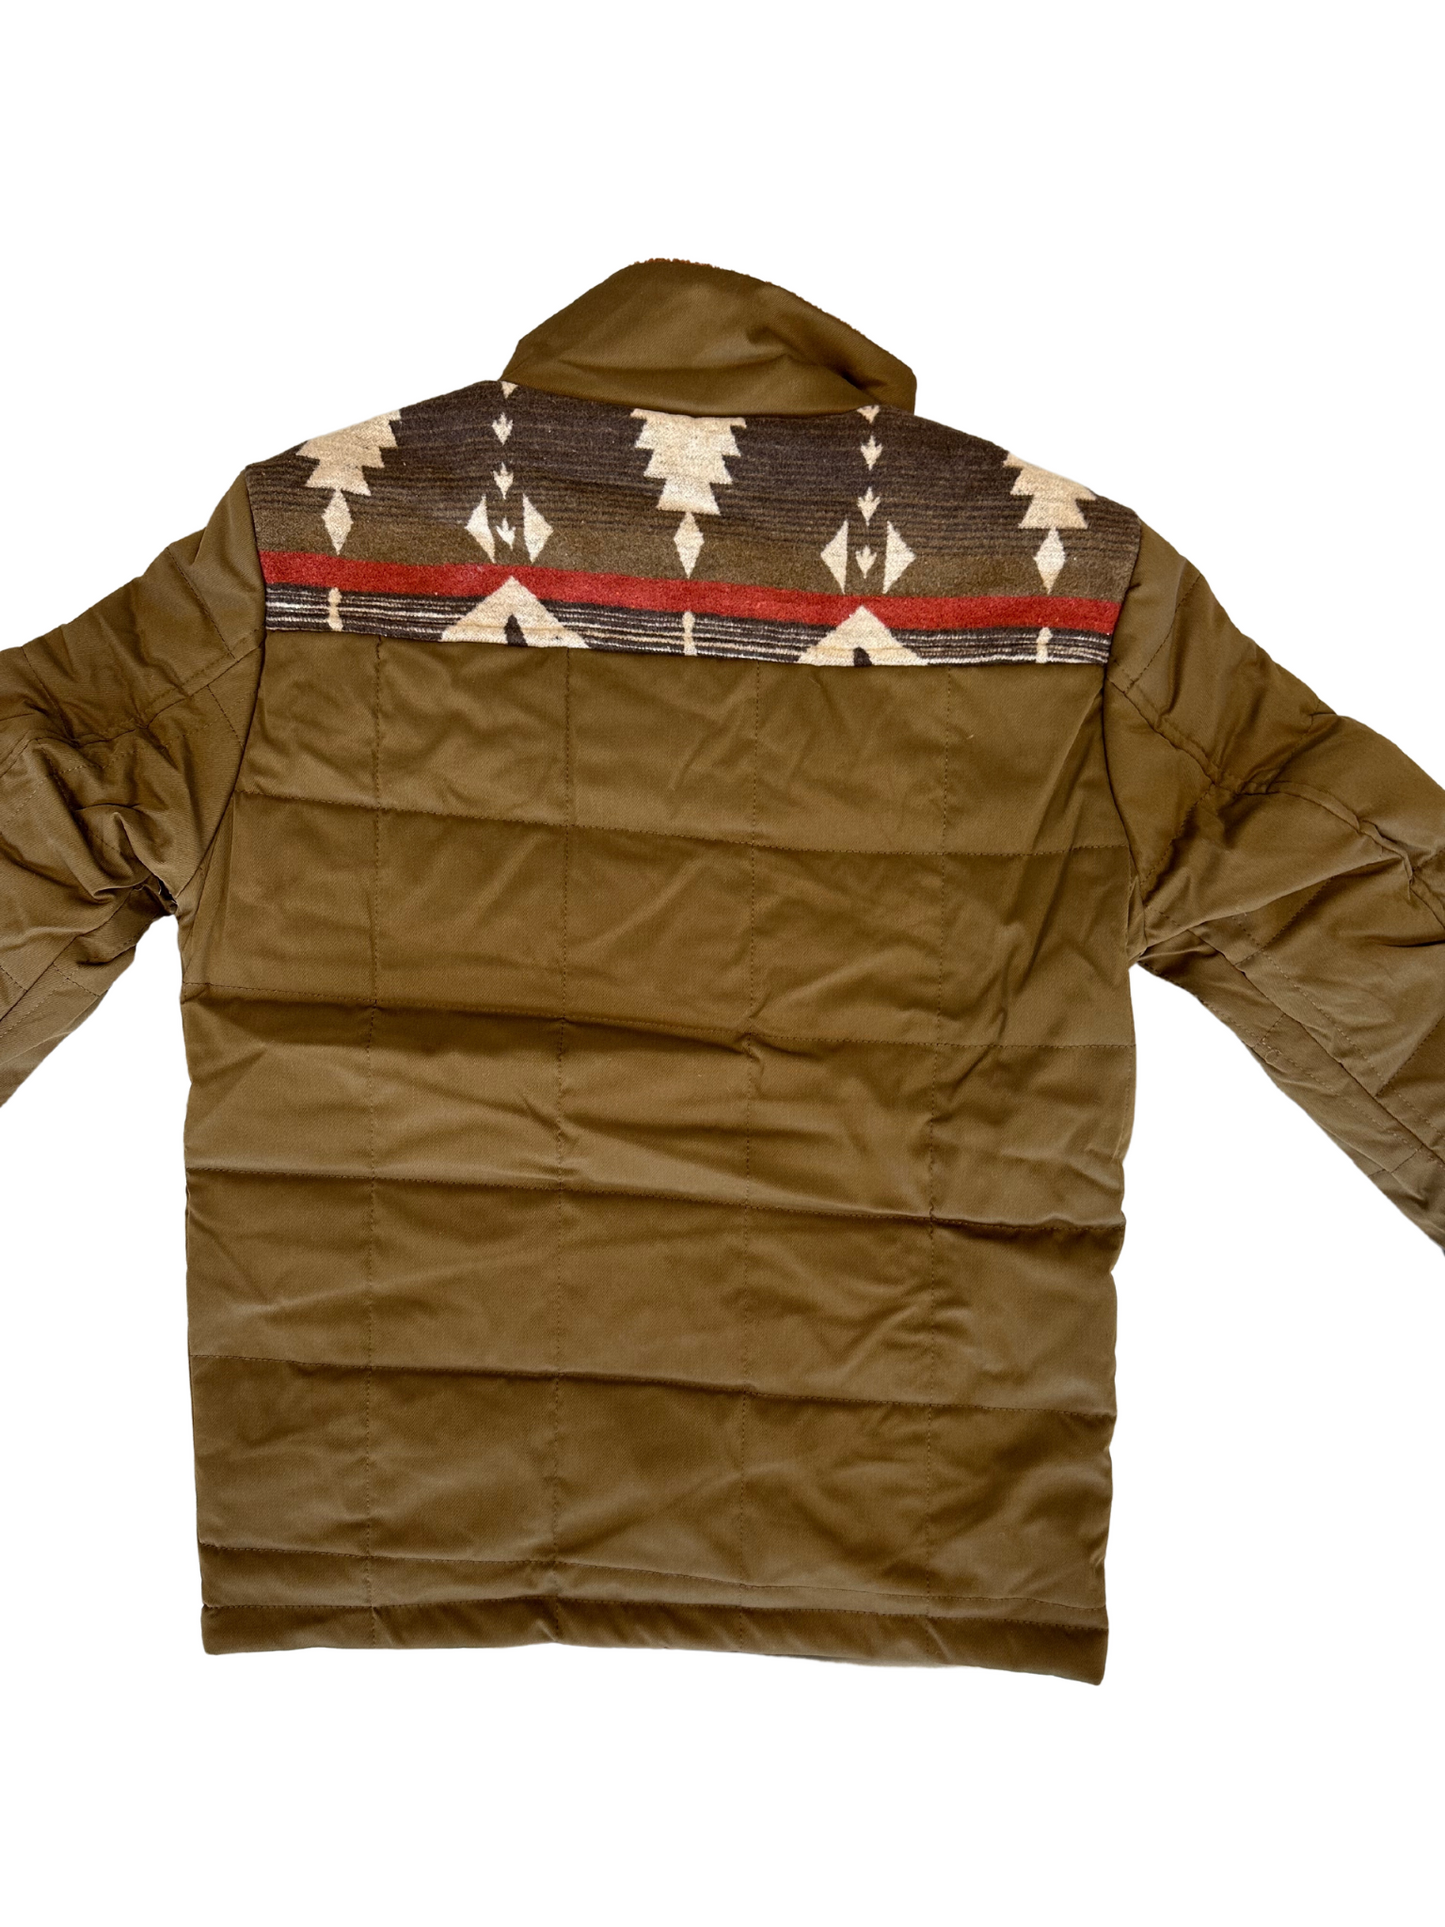 Lamasini Brown Tribal Puffer Jacket